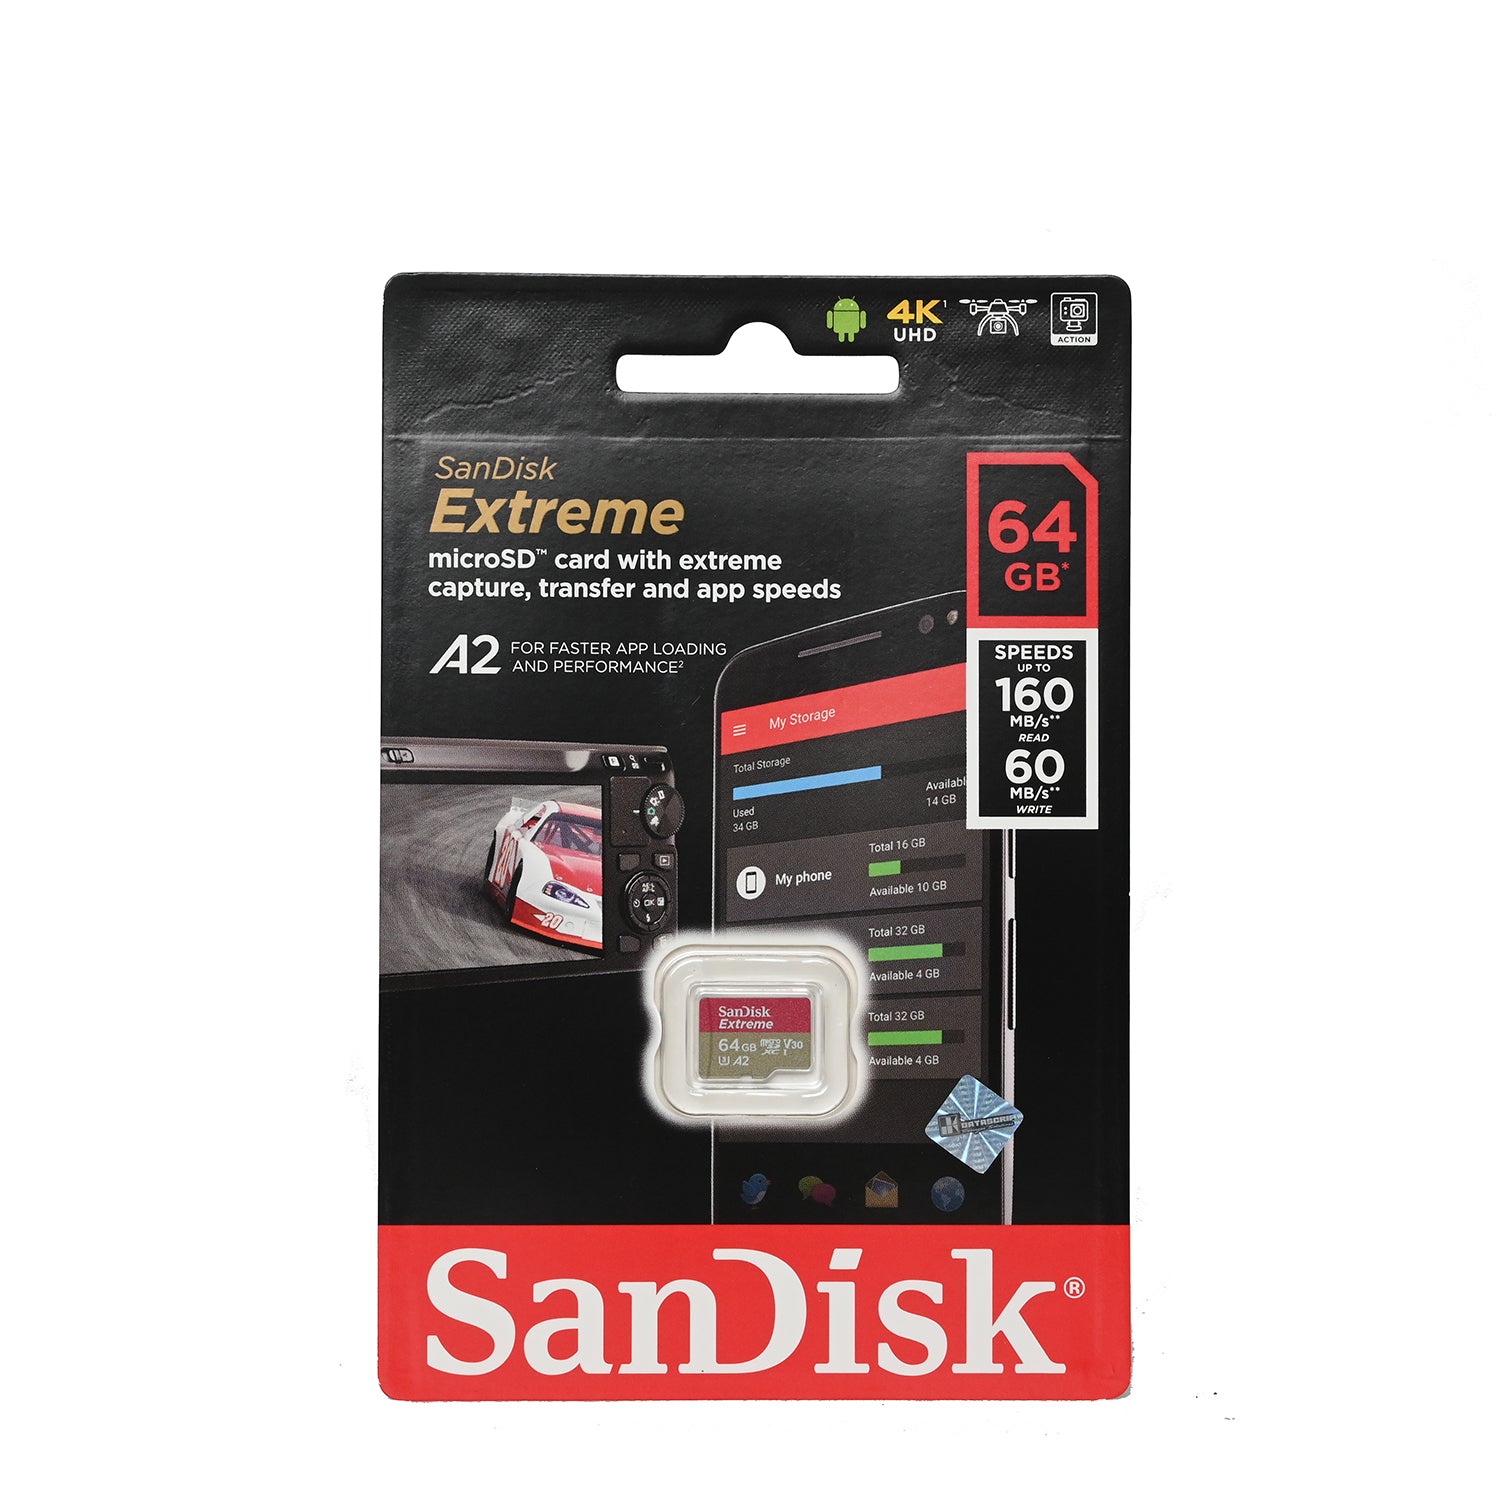 Sandisk Extreme MicroSDXC UHS-1 Card 64GB (160mbps)